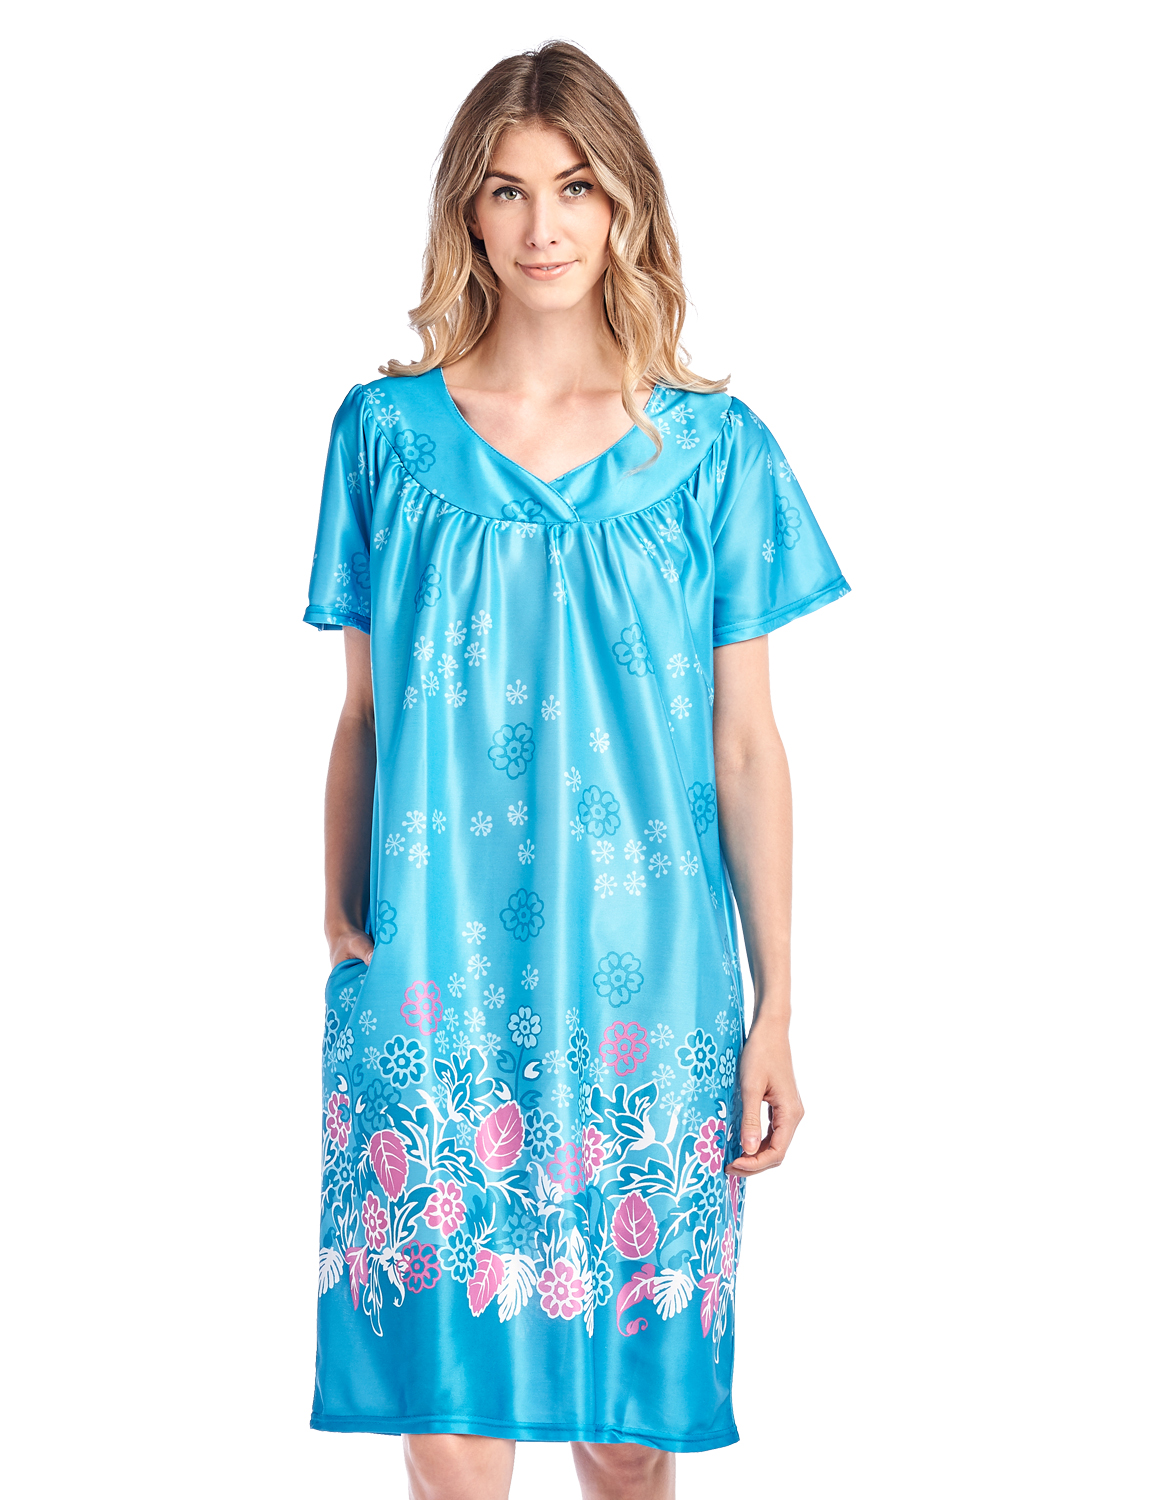 Casual Nights Women's Short Sleeve Muumuu Lounger Dress - image 1 of 5